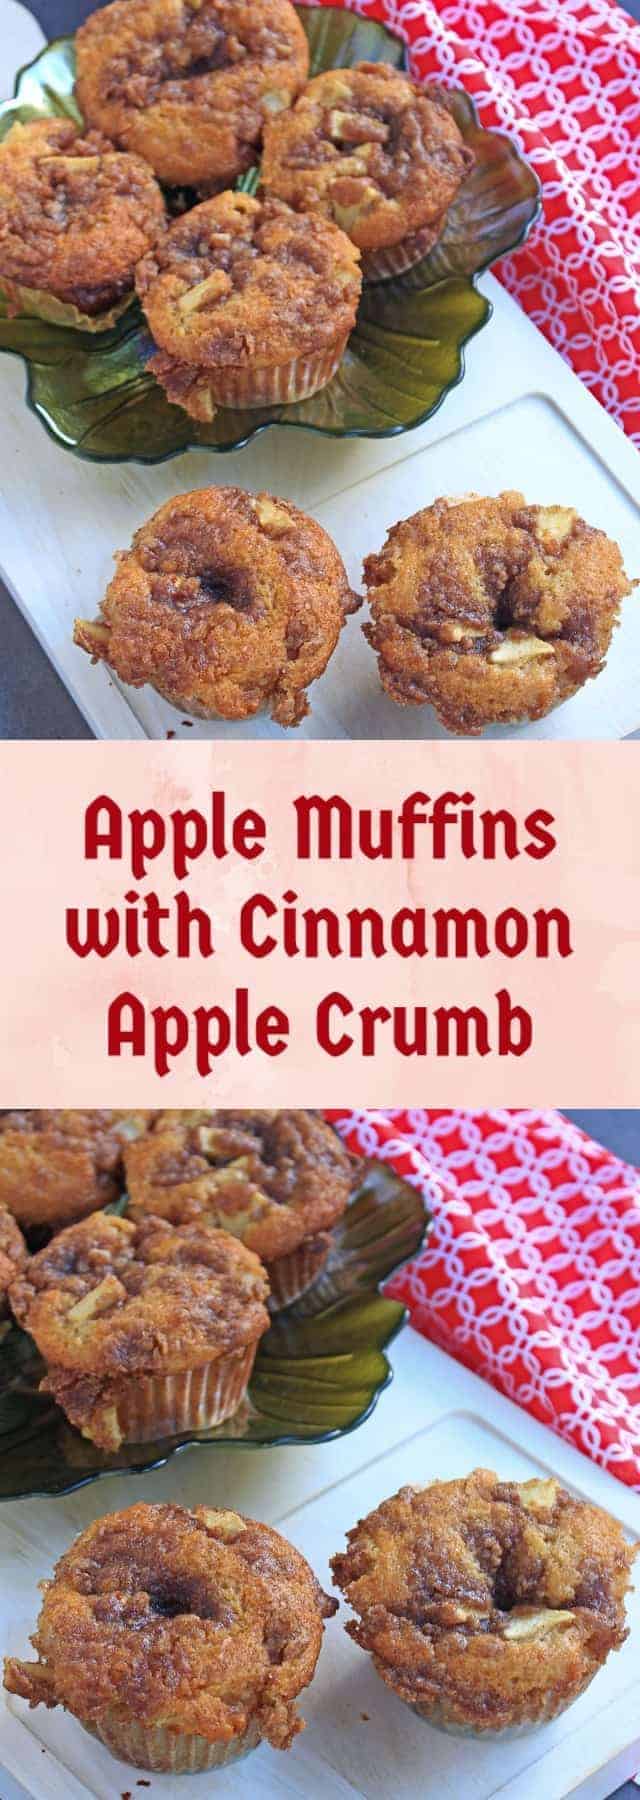 Looking very tasty Apple Muffins with Cinnamon Apple Crumb.